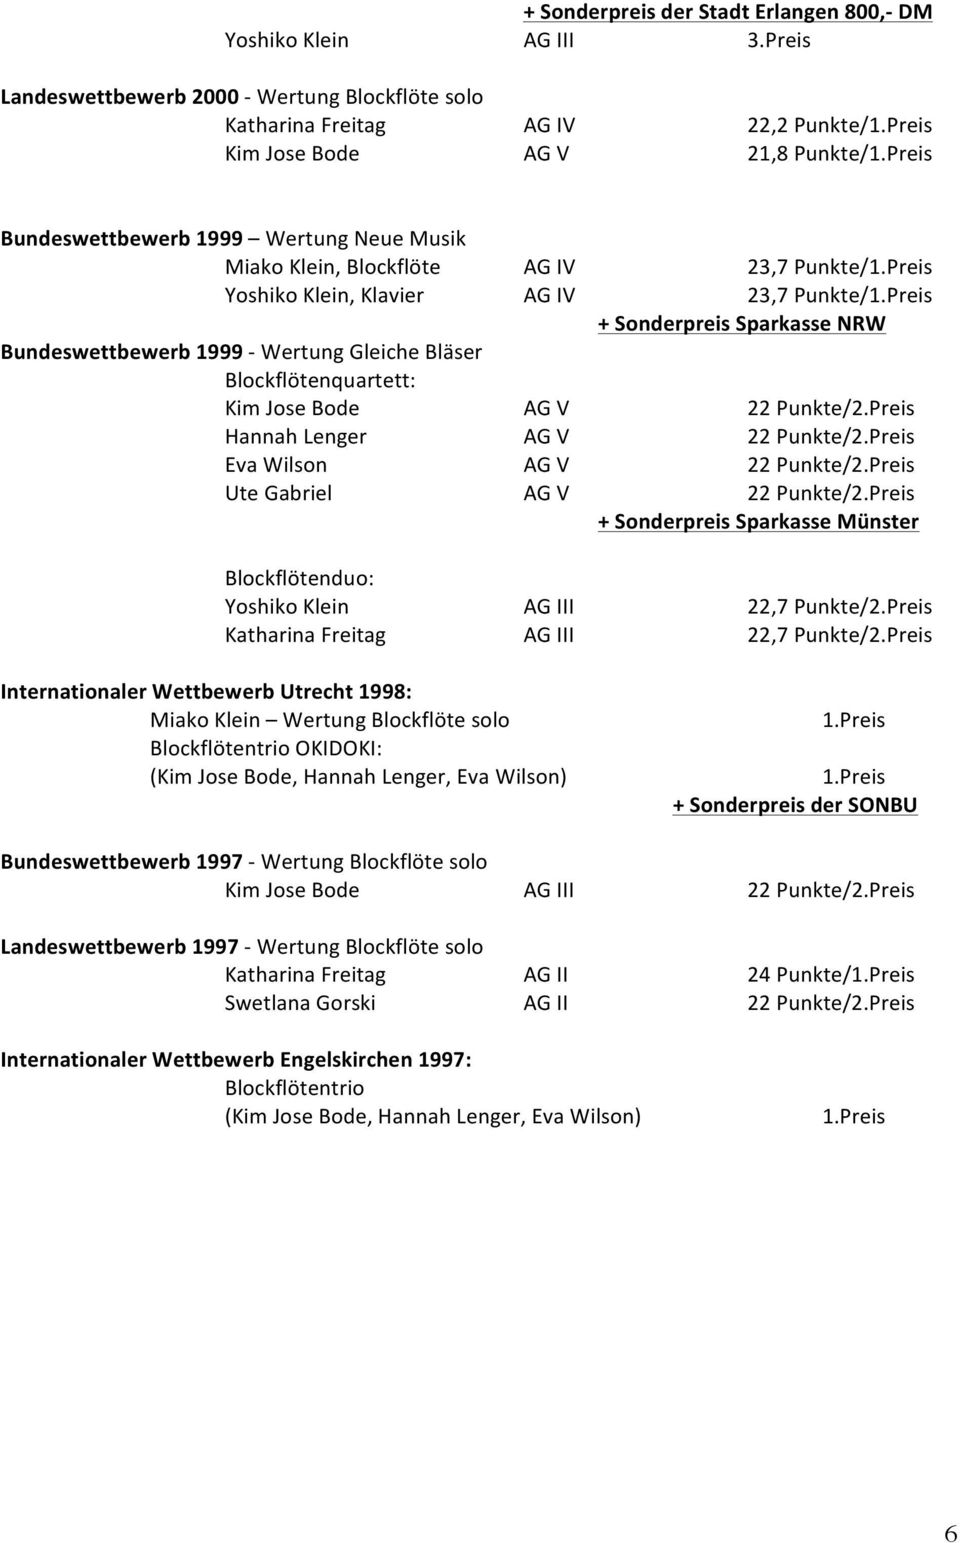 Preis + Sonderpreis Sparkasse NRW Bundeswettbewerb 1999 - Wertung Gleiche Bläser Kim Jose Bode AG V 22 Punkte/2.Preis Hannah Lenger AG V 22 Punkte/2.Preis Eva Wilson AG V 22 Punkte/2.